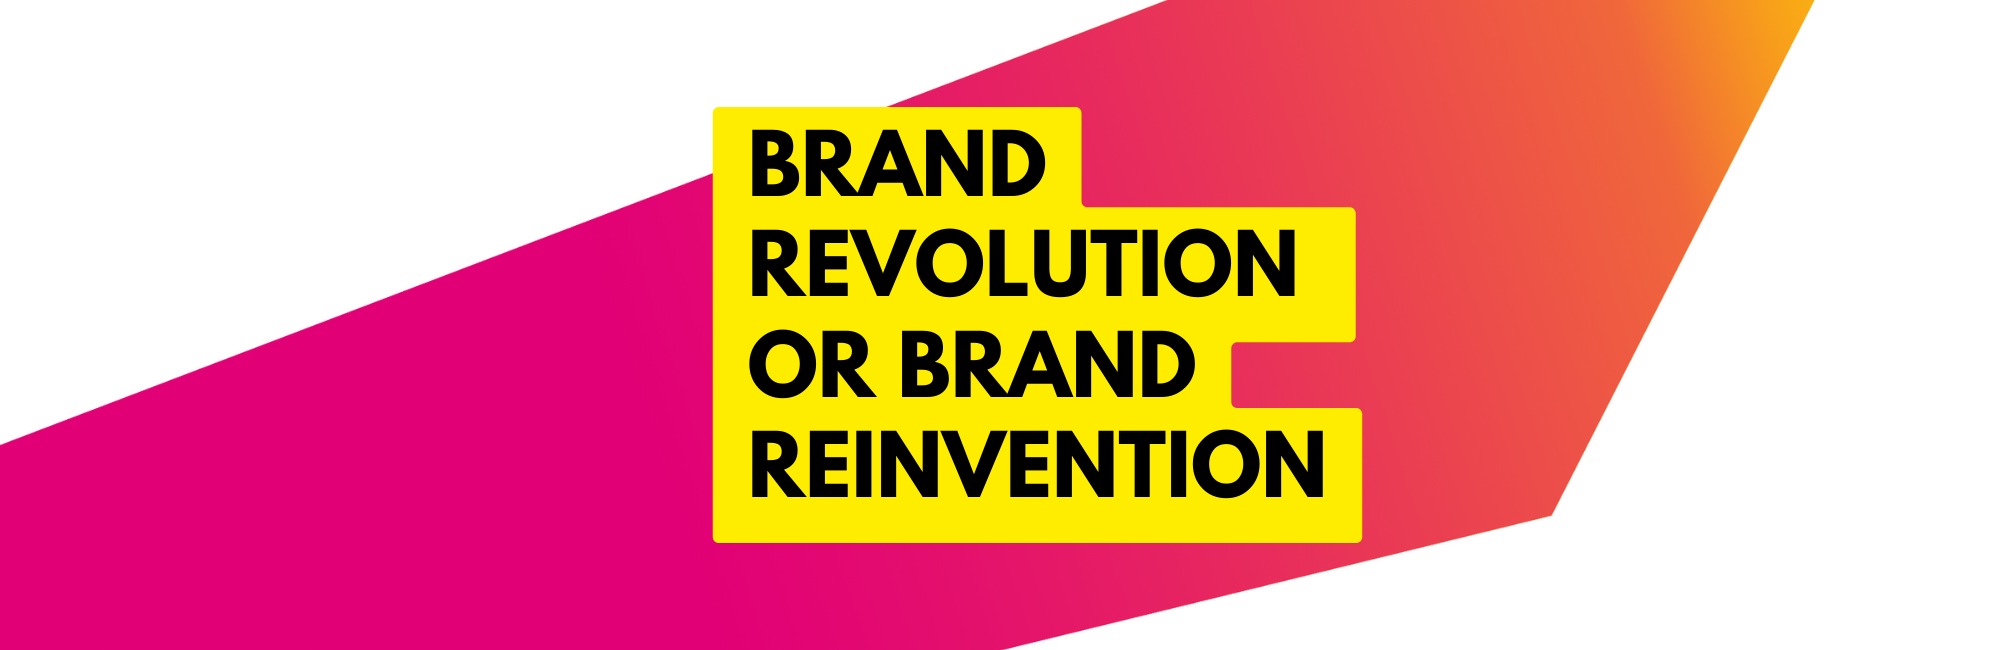 Brand Revolution Heading Title Image